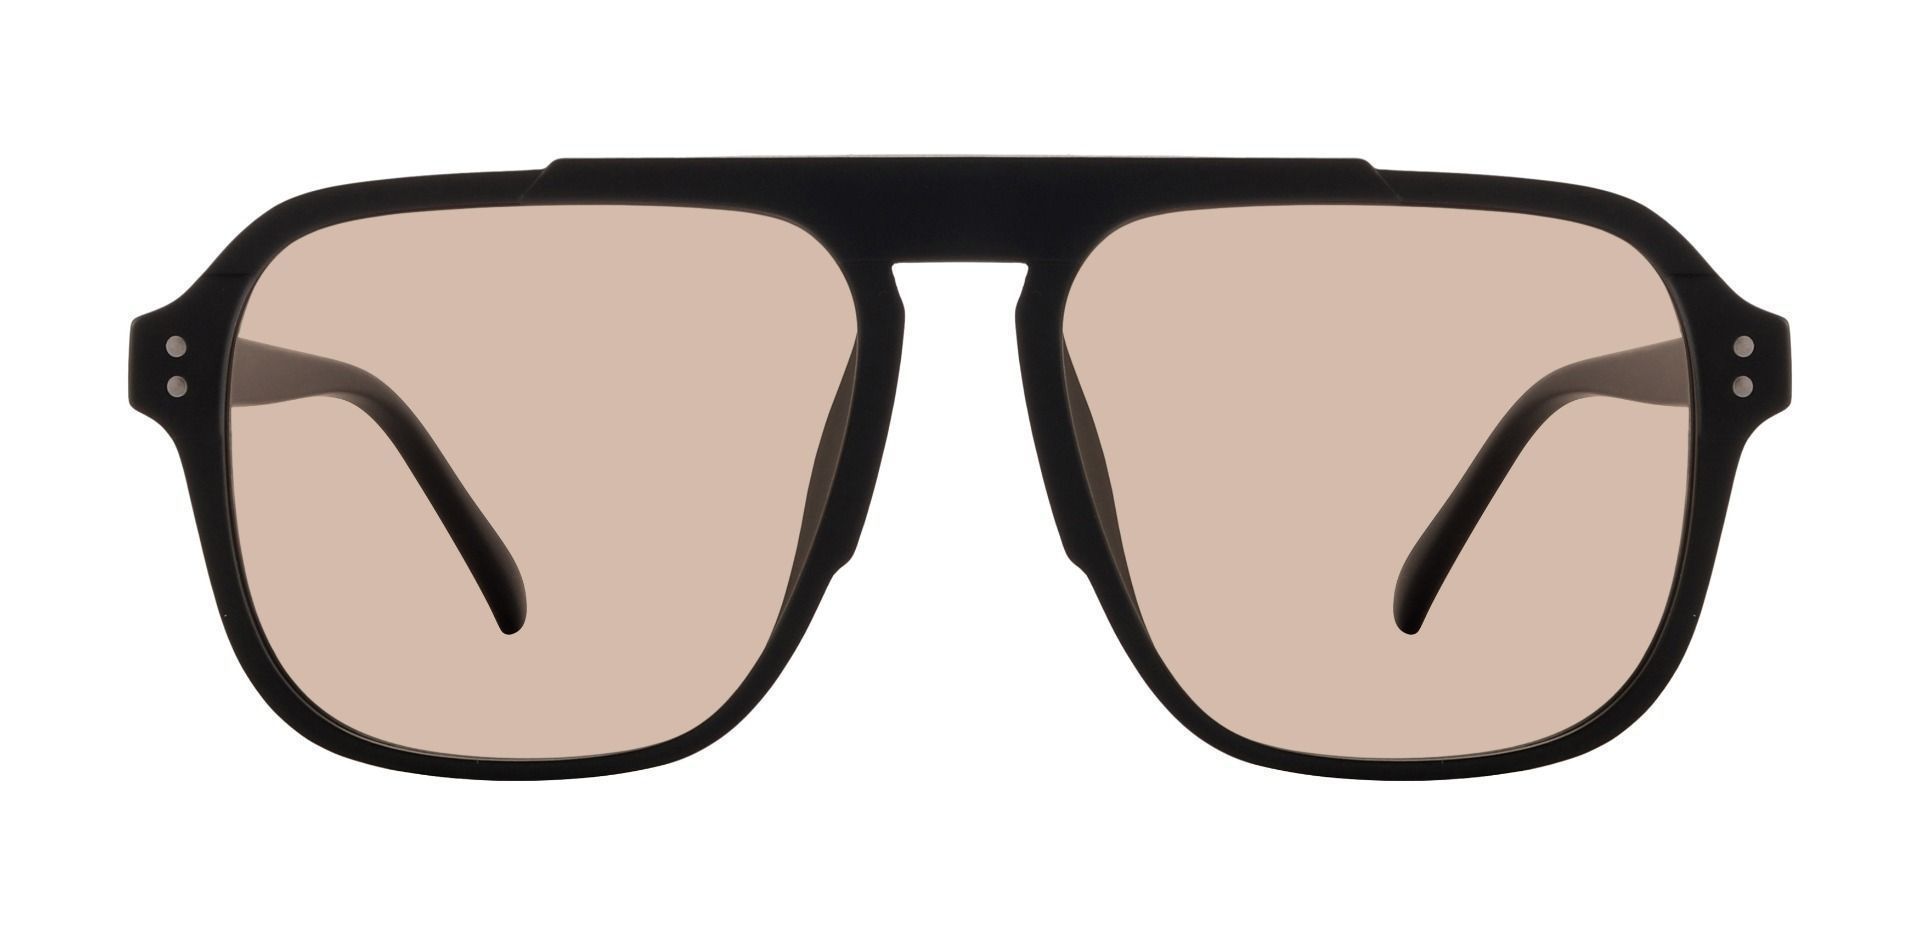 Sunglasses for Men - Prescription Available